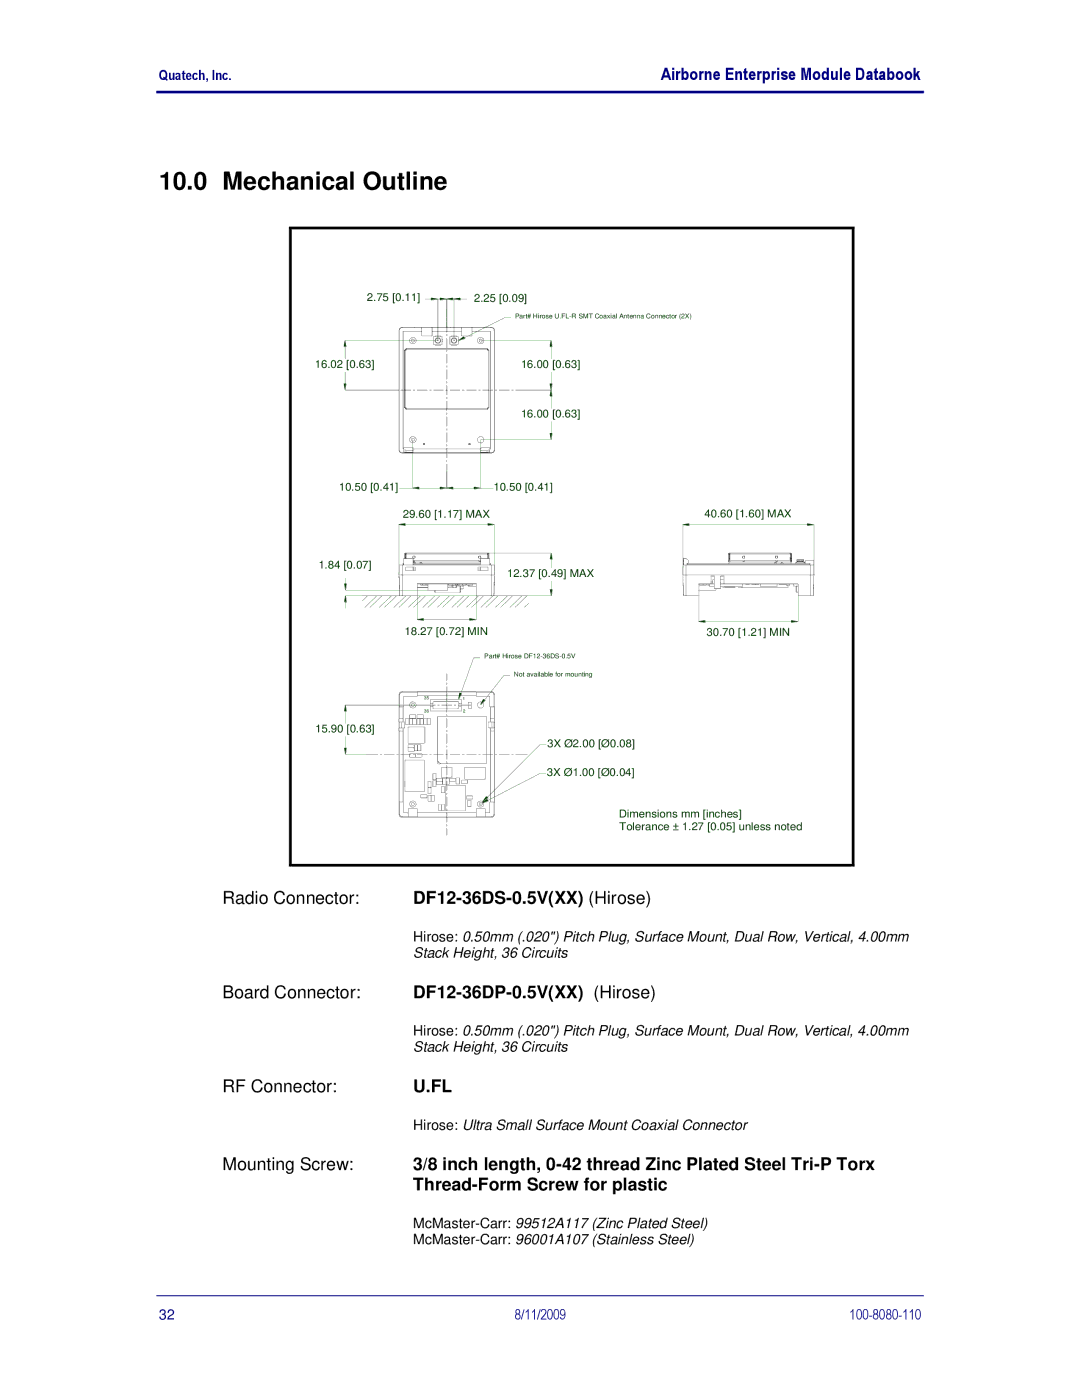 Quatech 802.11B/G Mechanical Outline, Radio Connector DF12-36DS-0.5VXX Hirose, Board Connector DF12-36DP-0.5VXX Hirose 